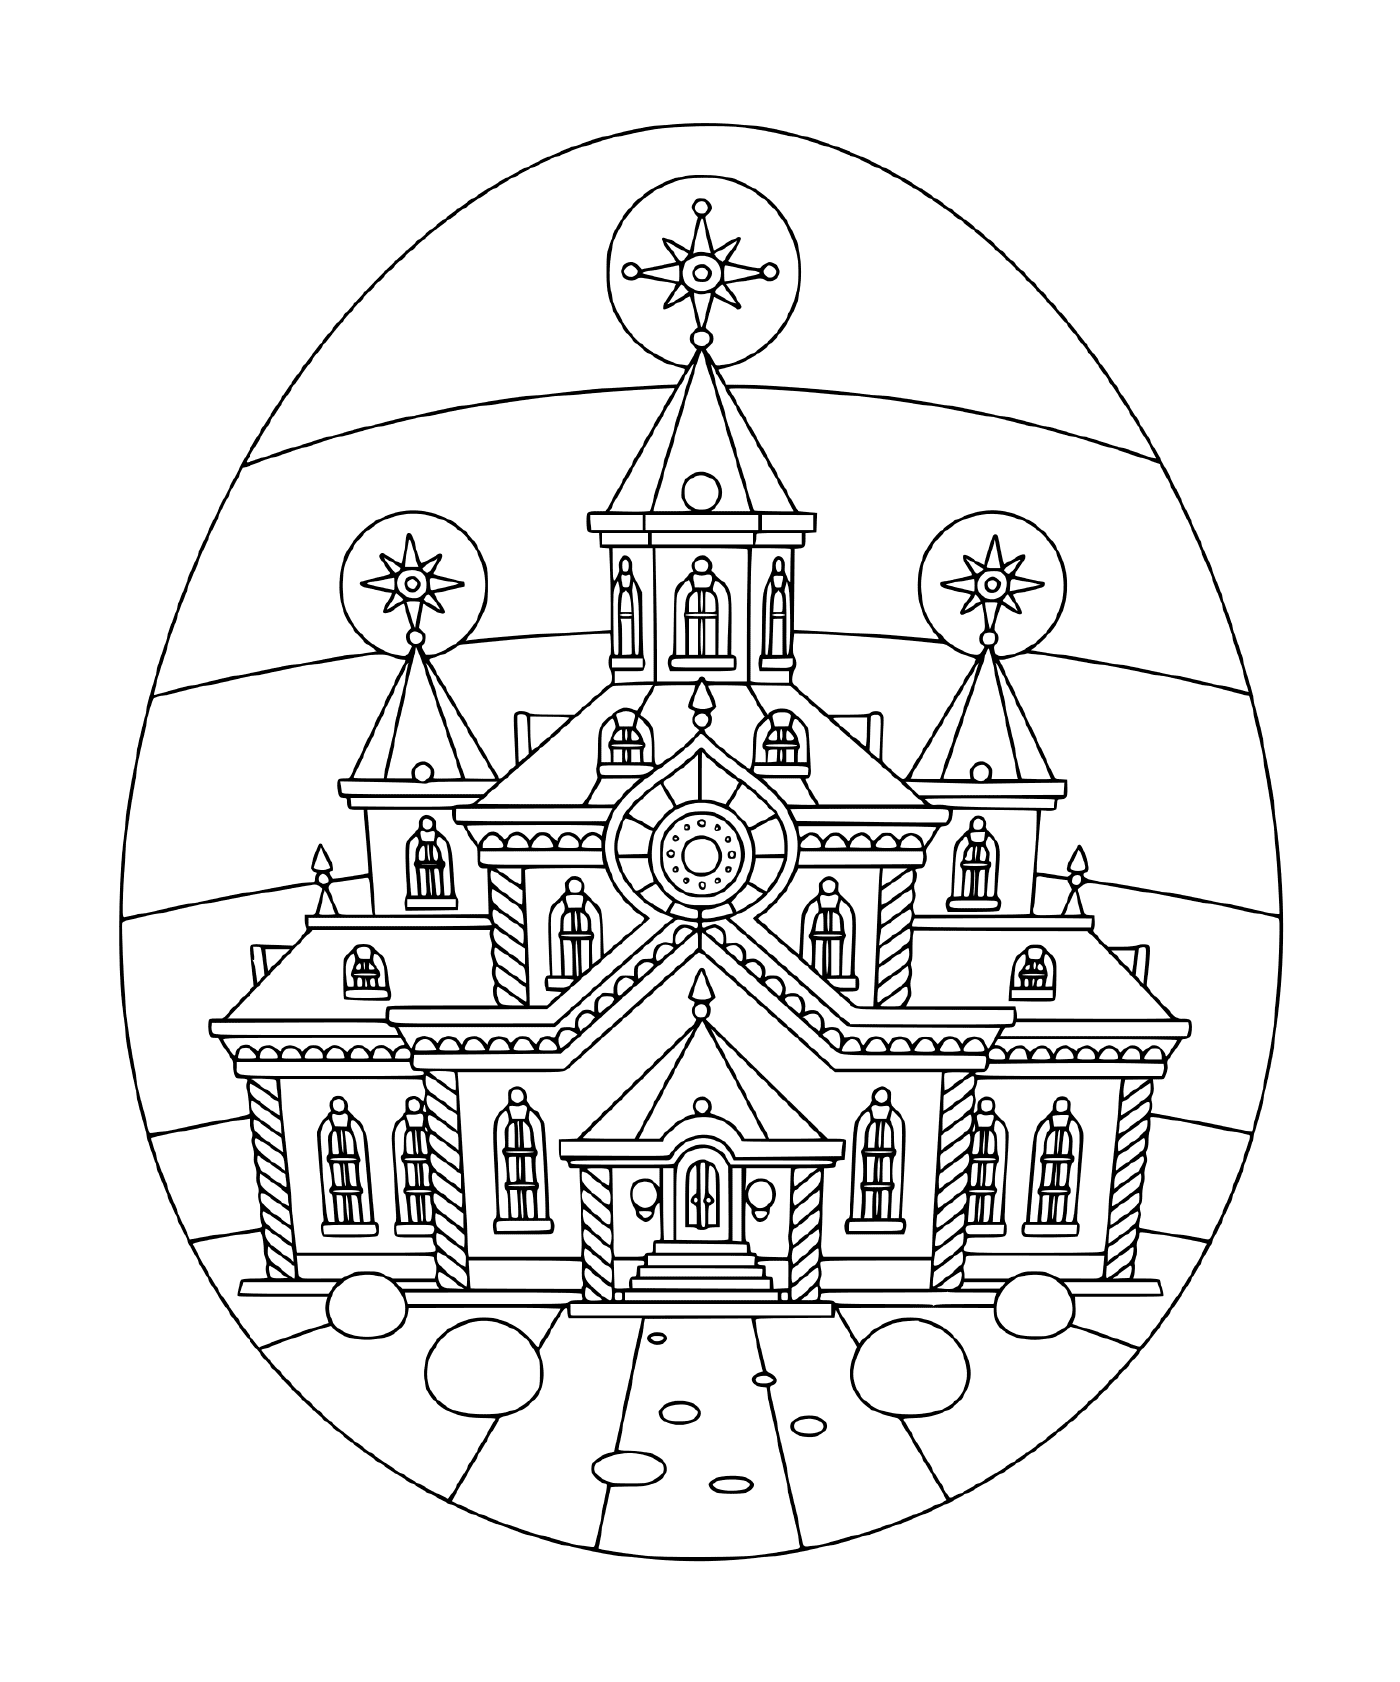  Igreja com um relógio 